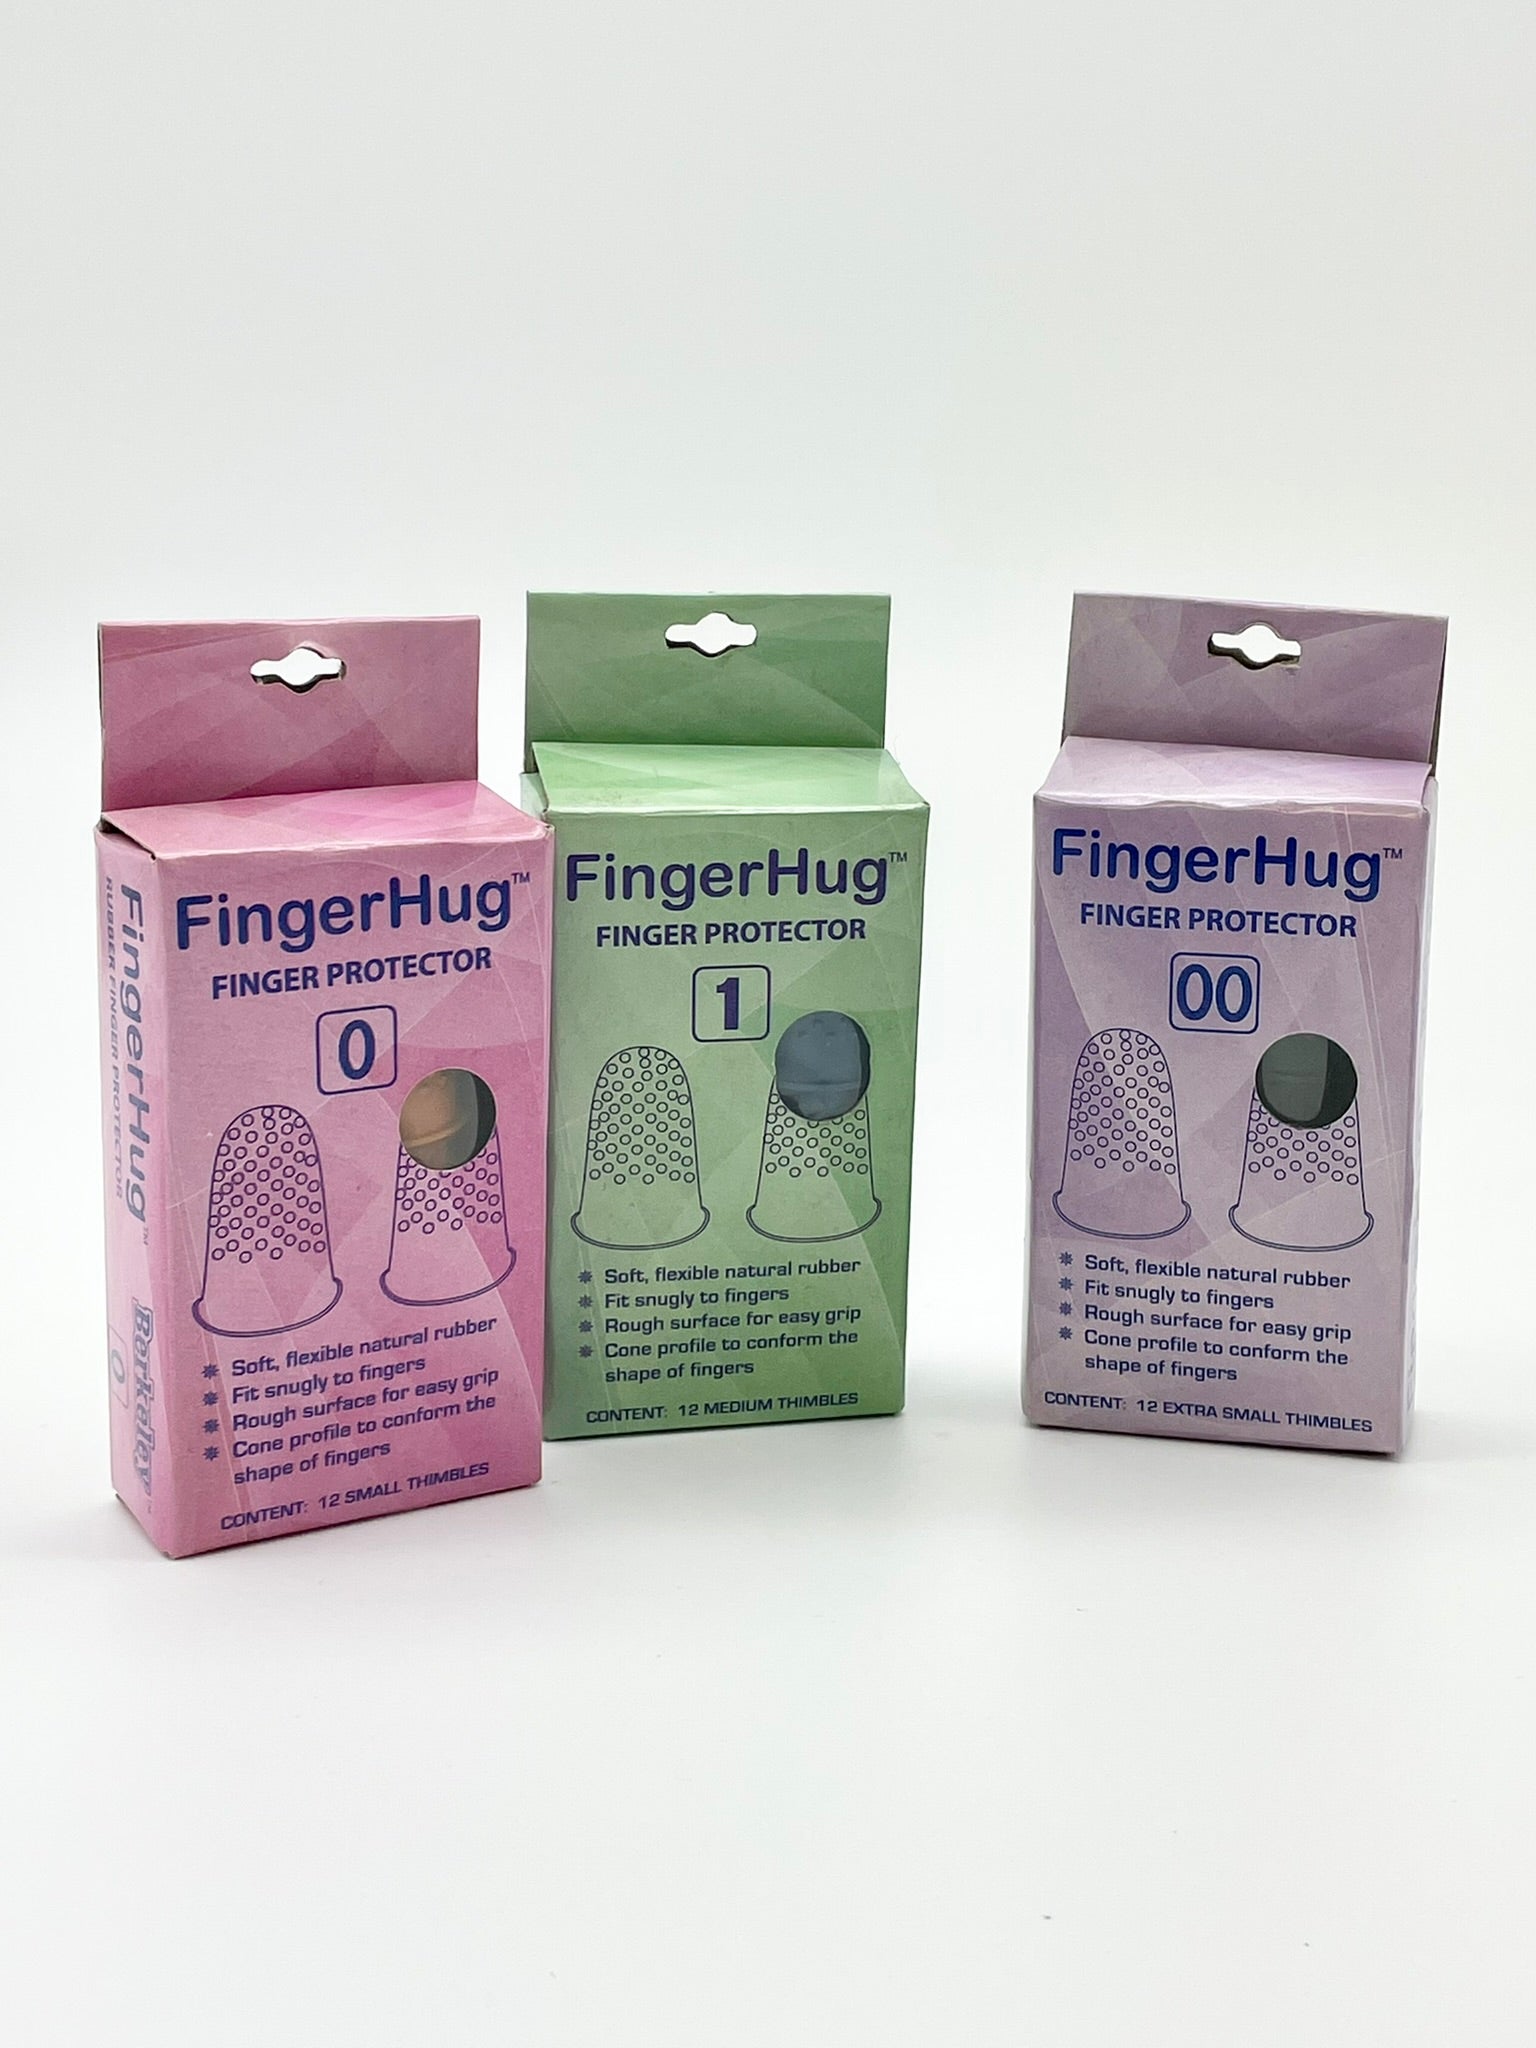 FingerHug Finger Protector Rubber Thimbles - Large – Global Beauty